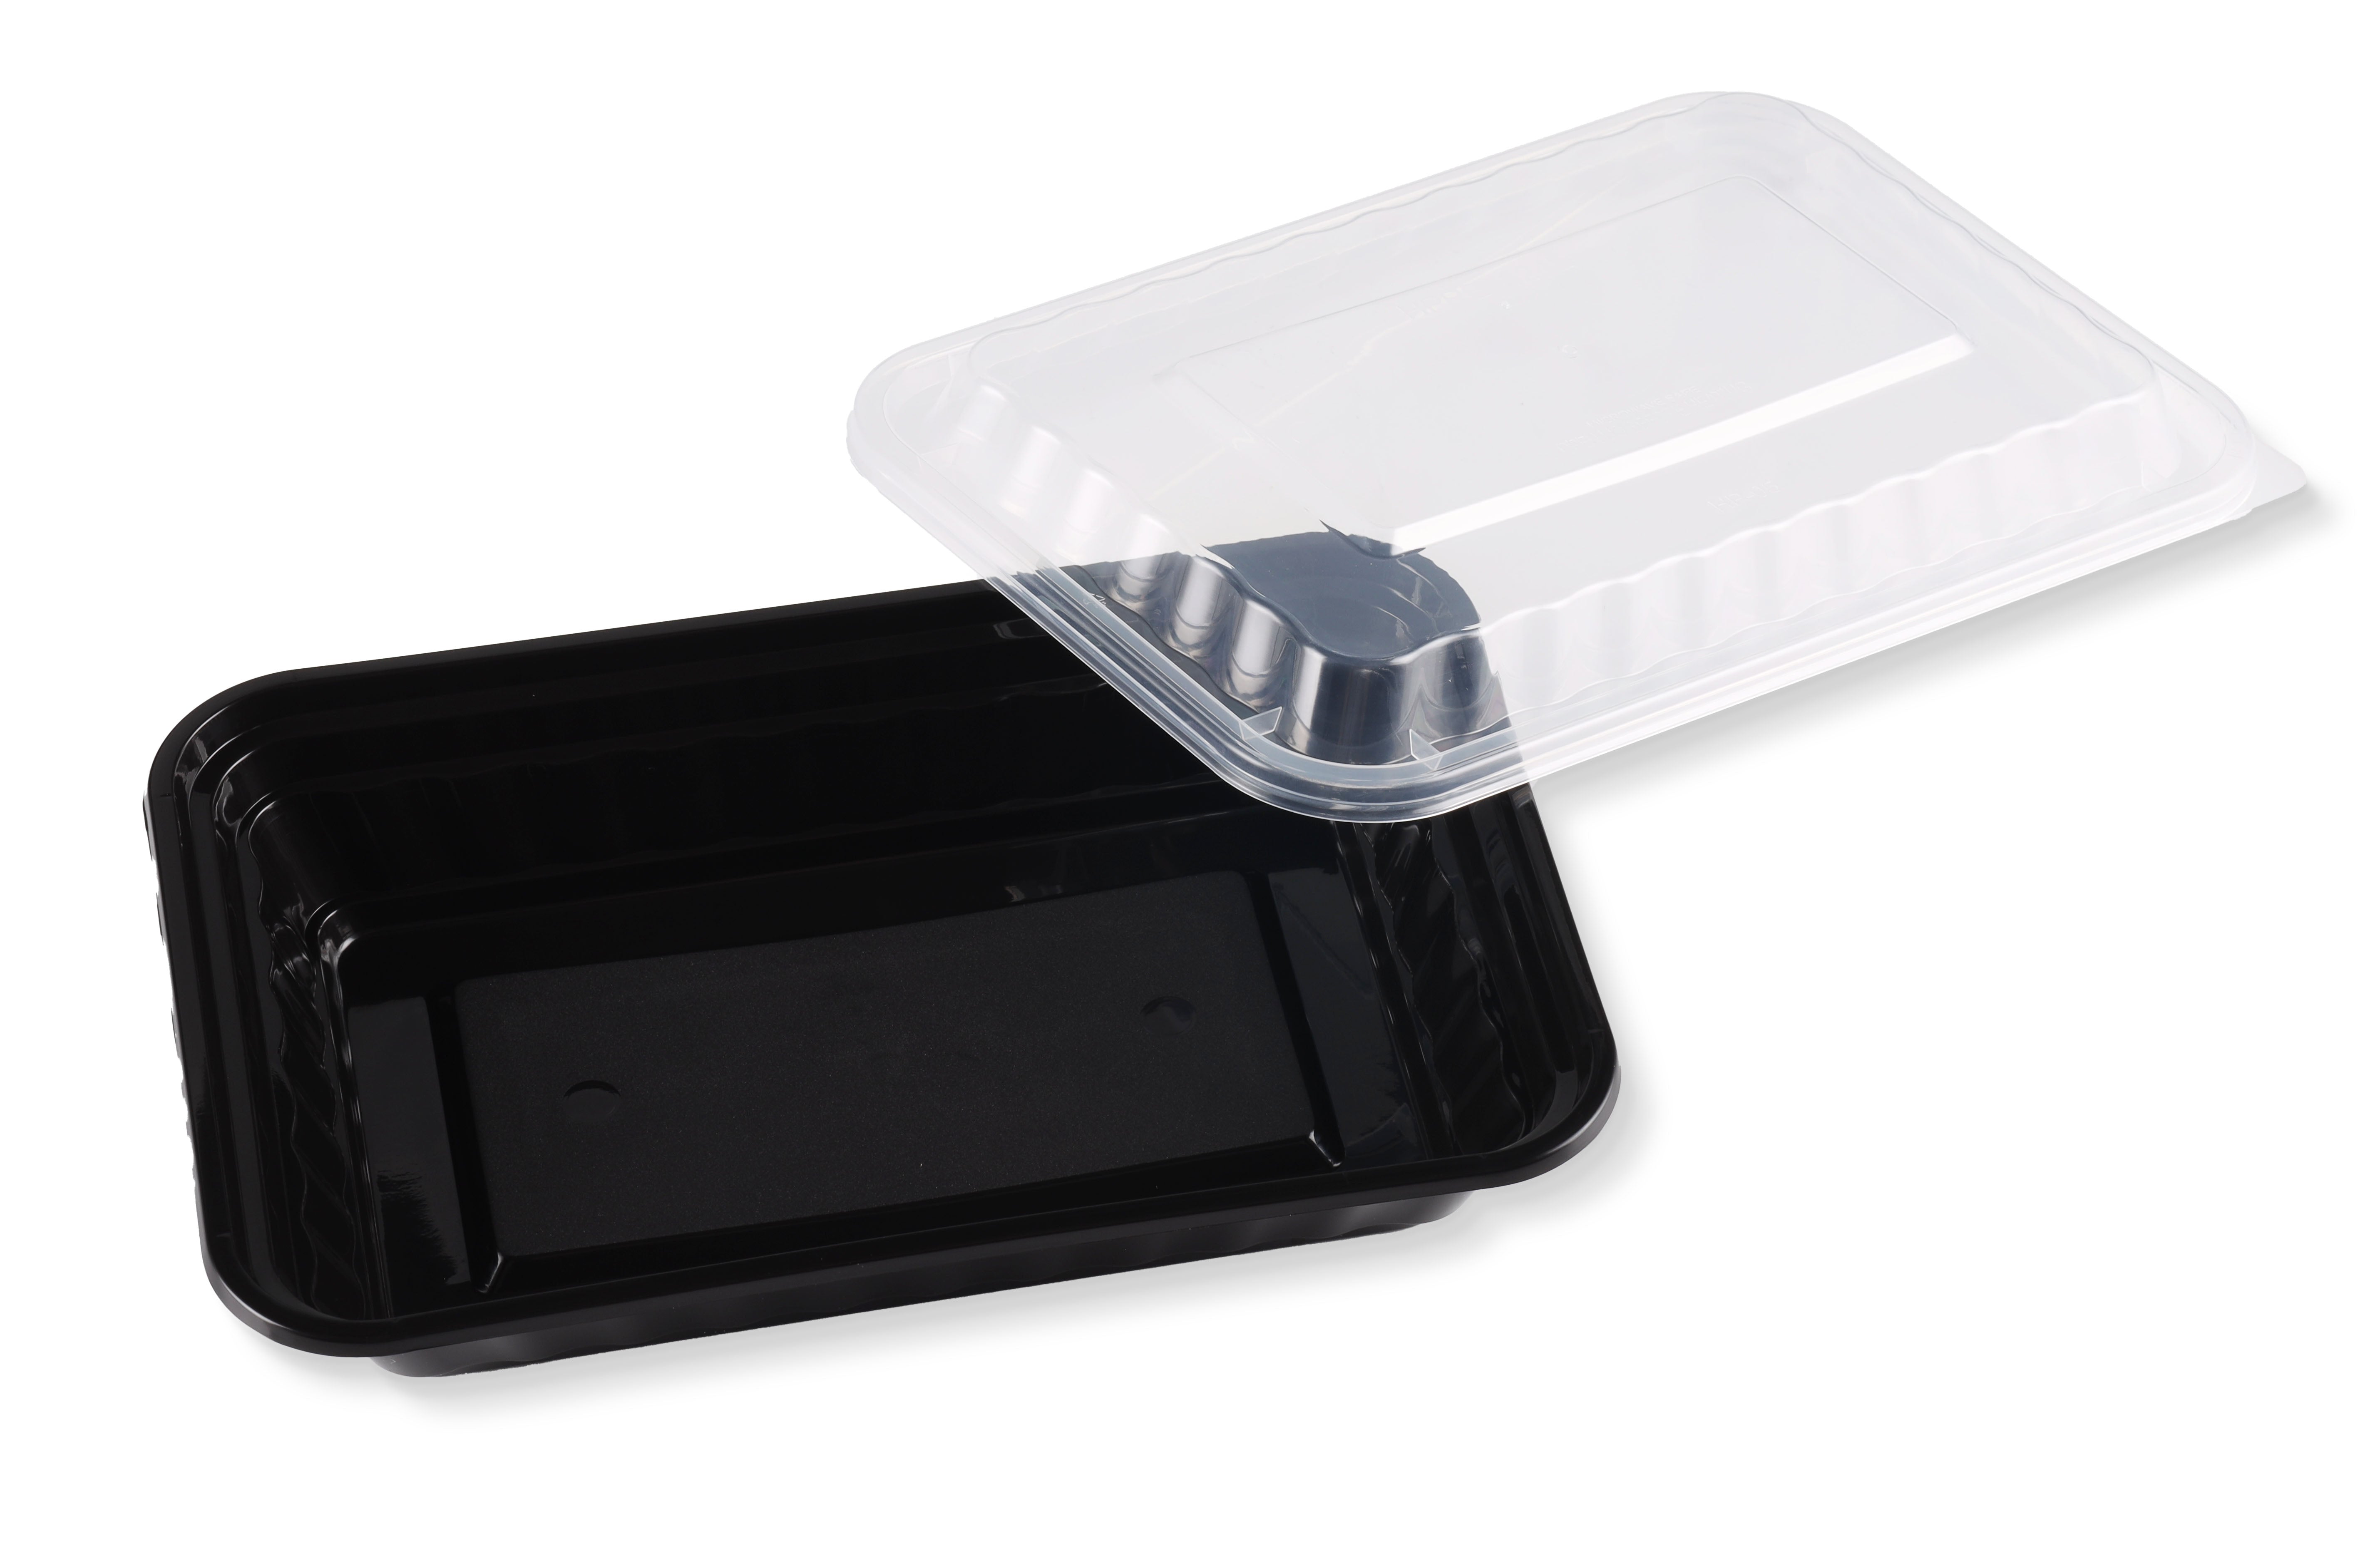 Sazon 16 oz Rectangular Meal Prep Containers 150 Set , Reusable, Stackable, Microwave/Dishwasher/Freezer Safe, BPA Free